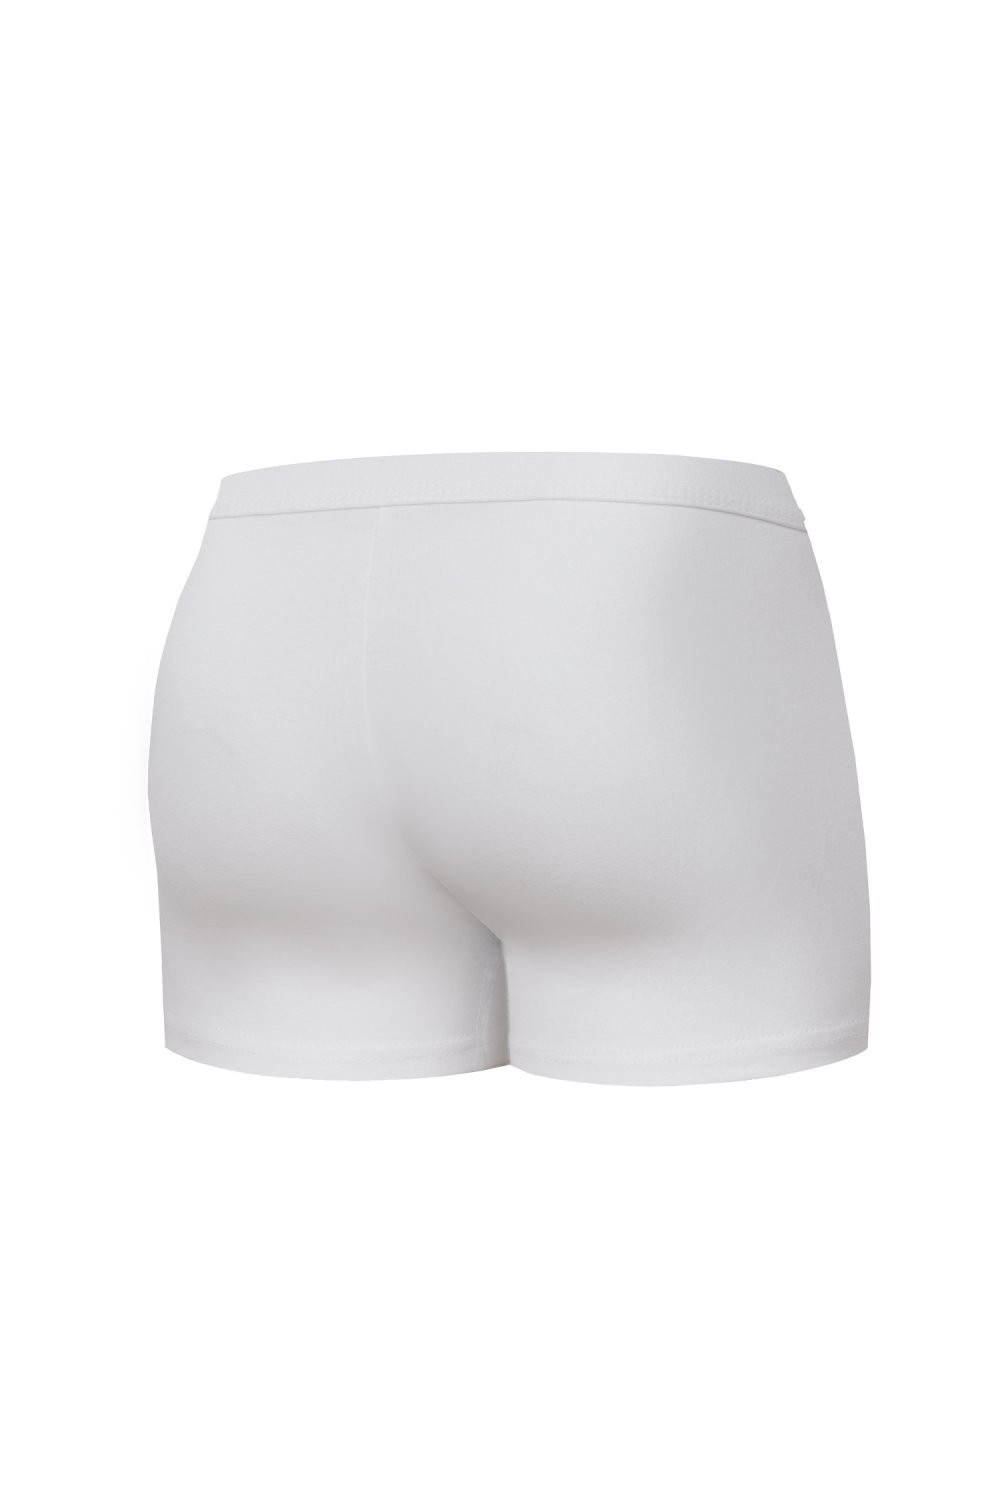 Pánské boxerky 223 Authentic mini white - CORNETTE Barva: Bílá, Velikost: M